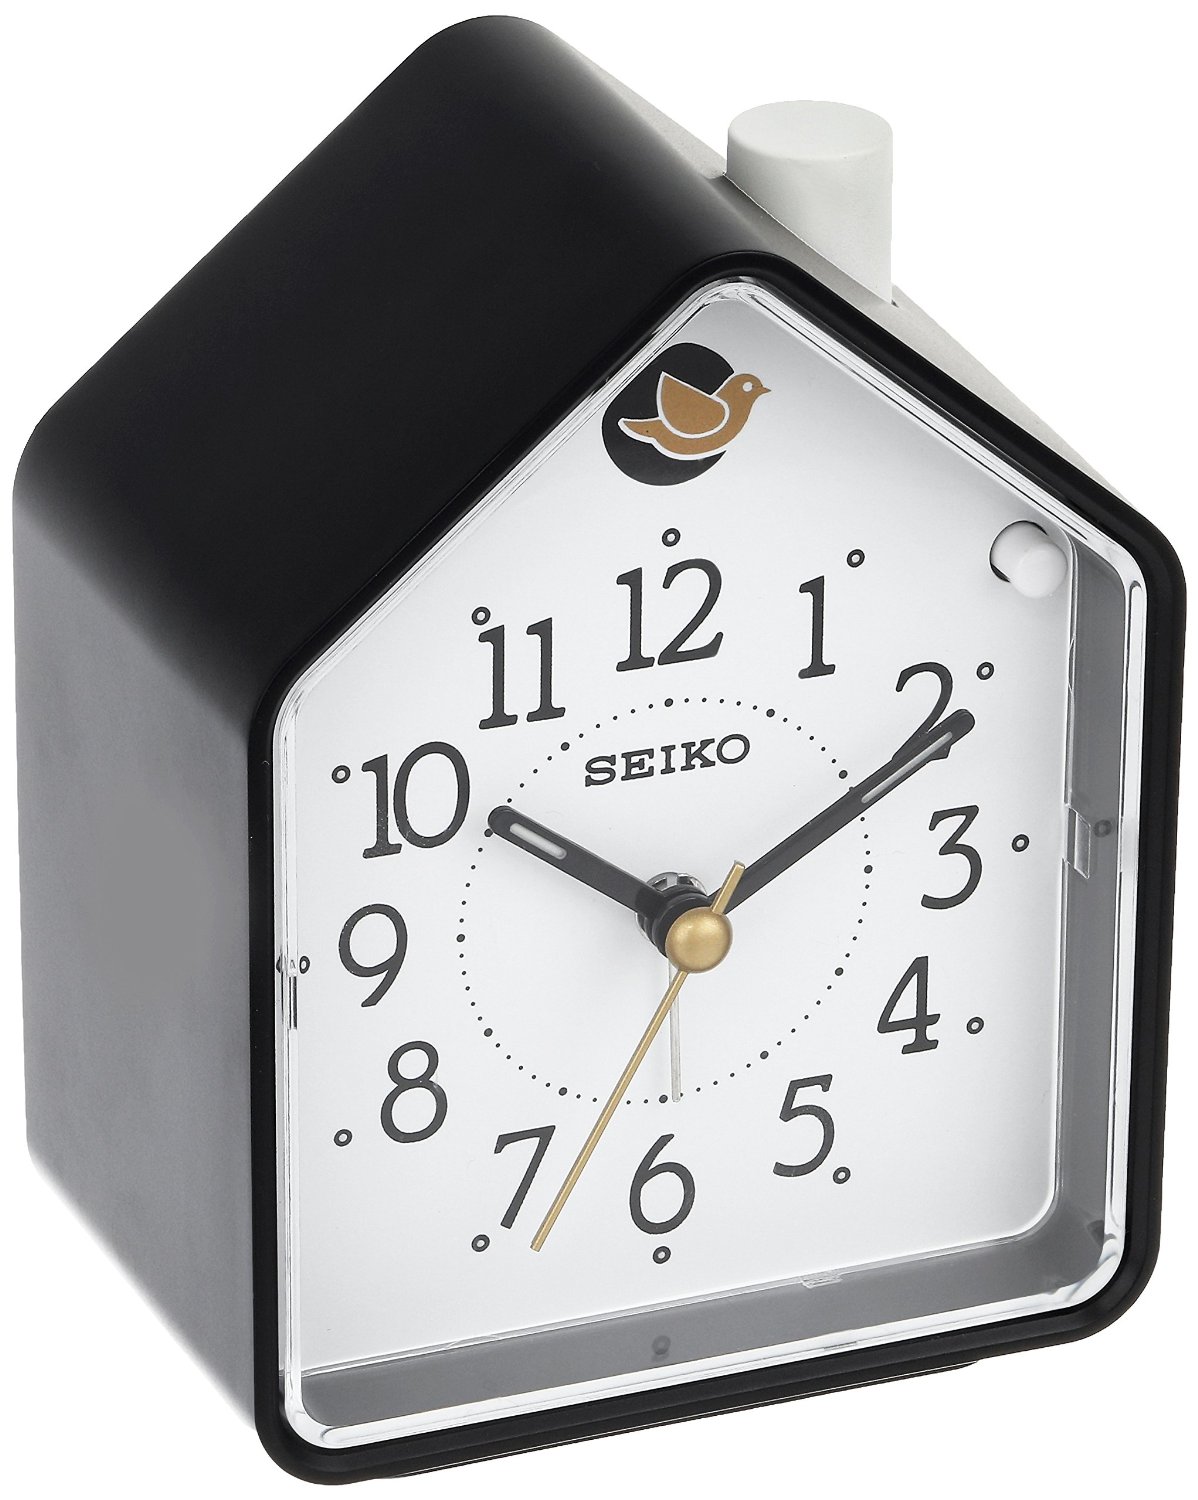 QHP002KLH Seiko Bedside Alarm Japanese Quartz Alarm Clock